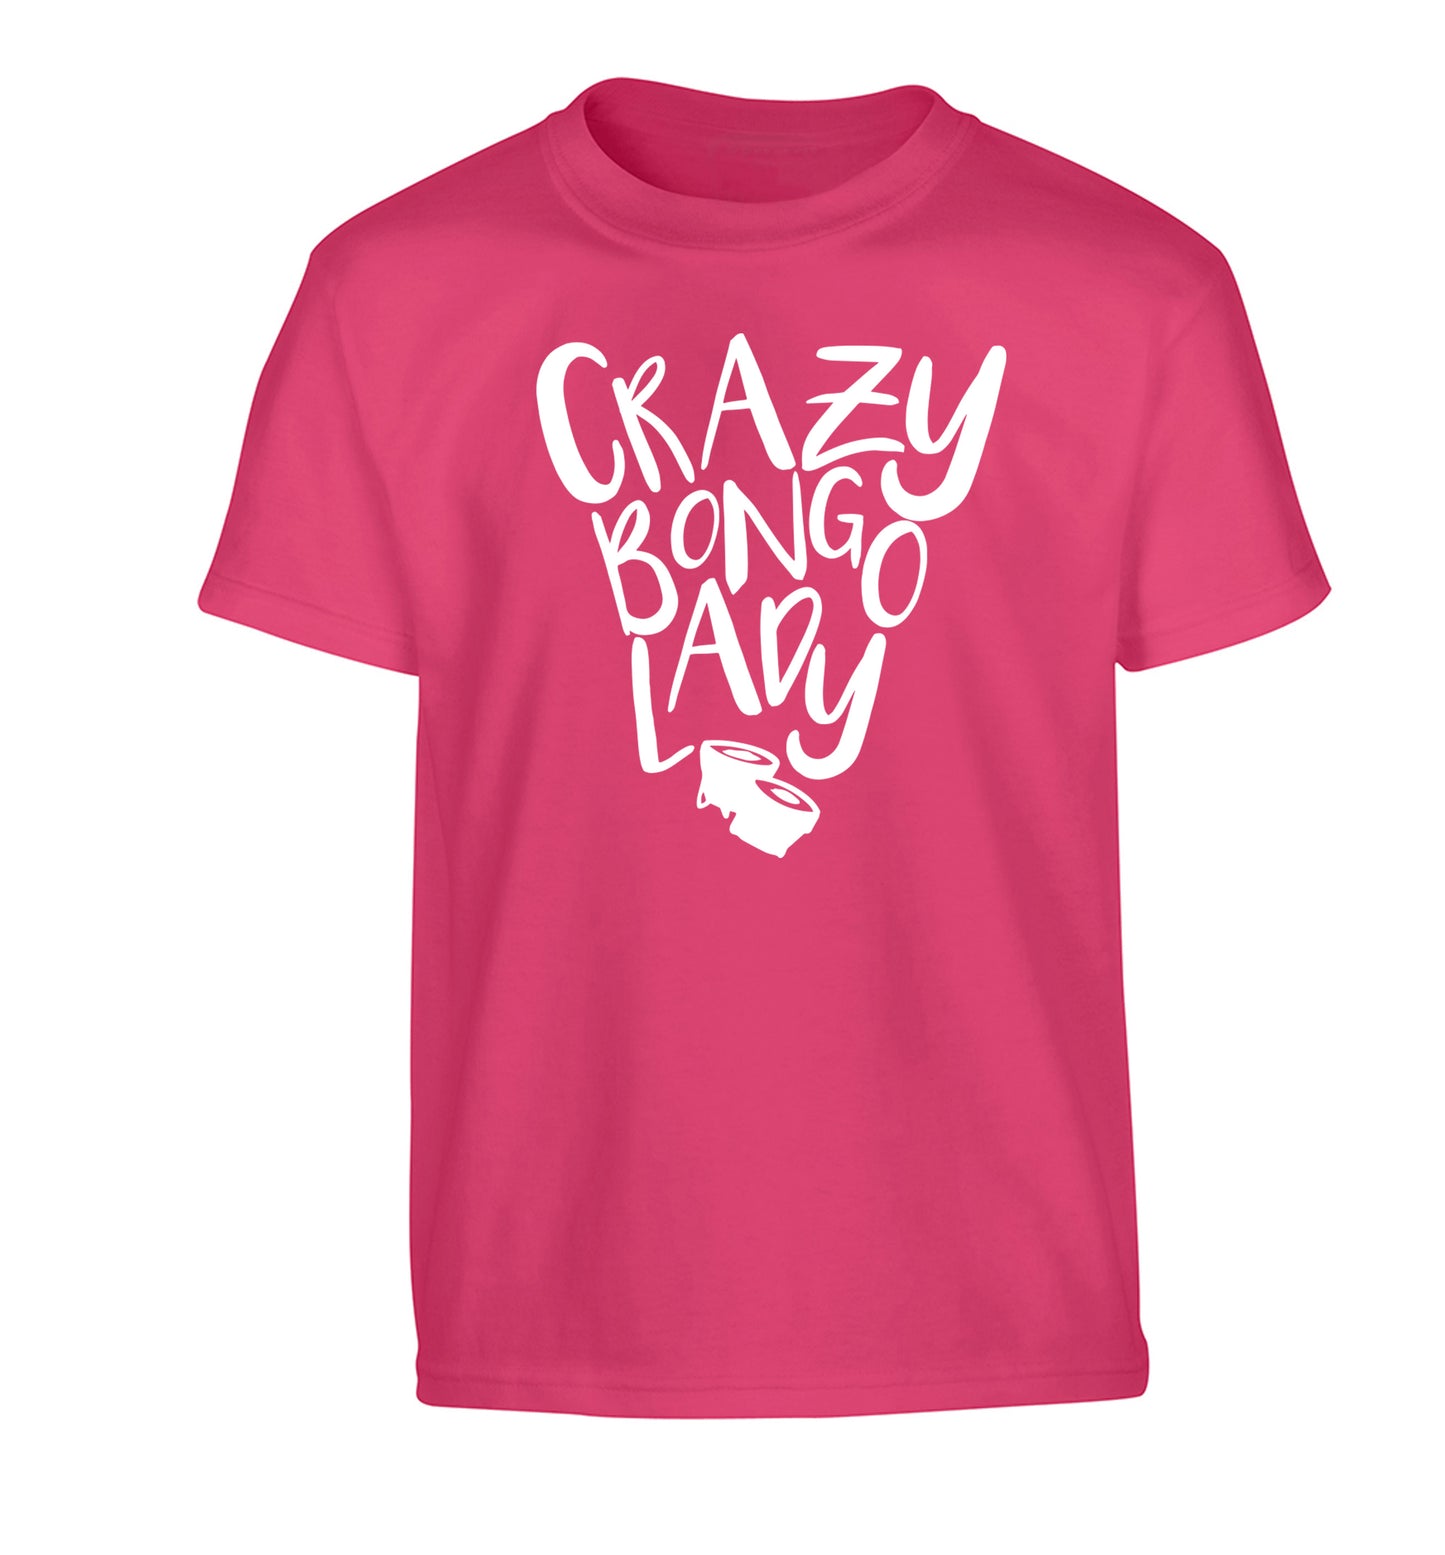 Crazy bongo lady Children's pink Tshirt 12-14 Years